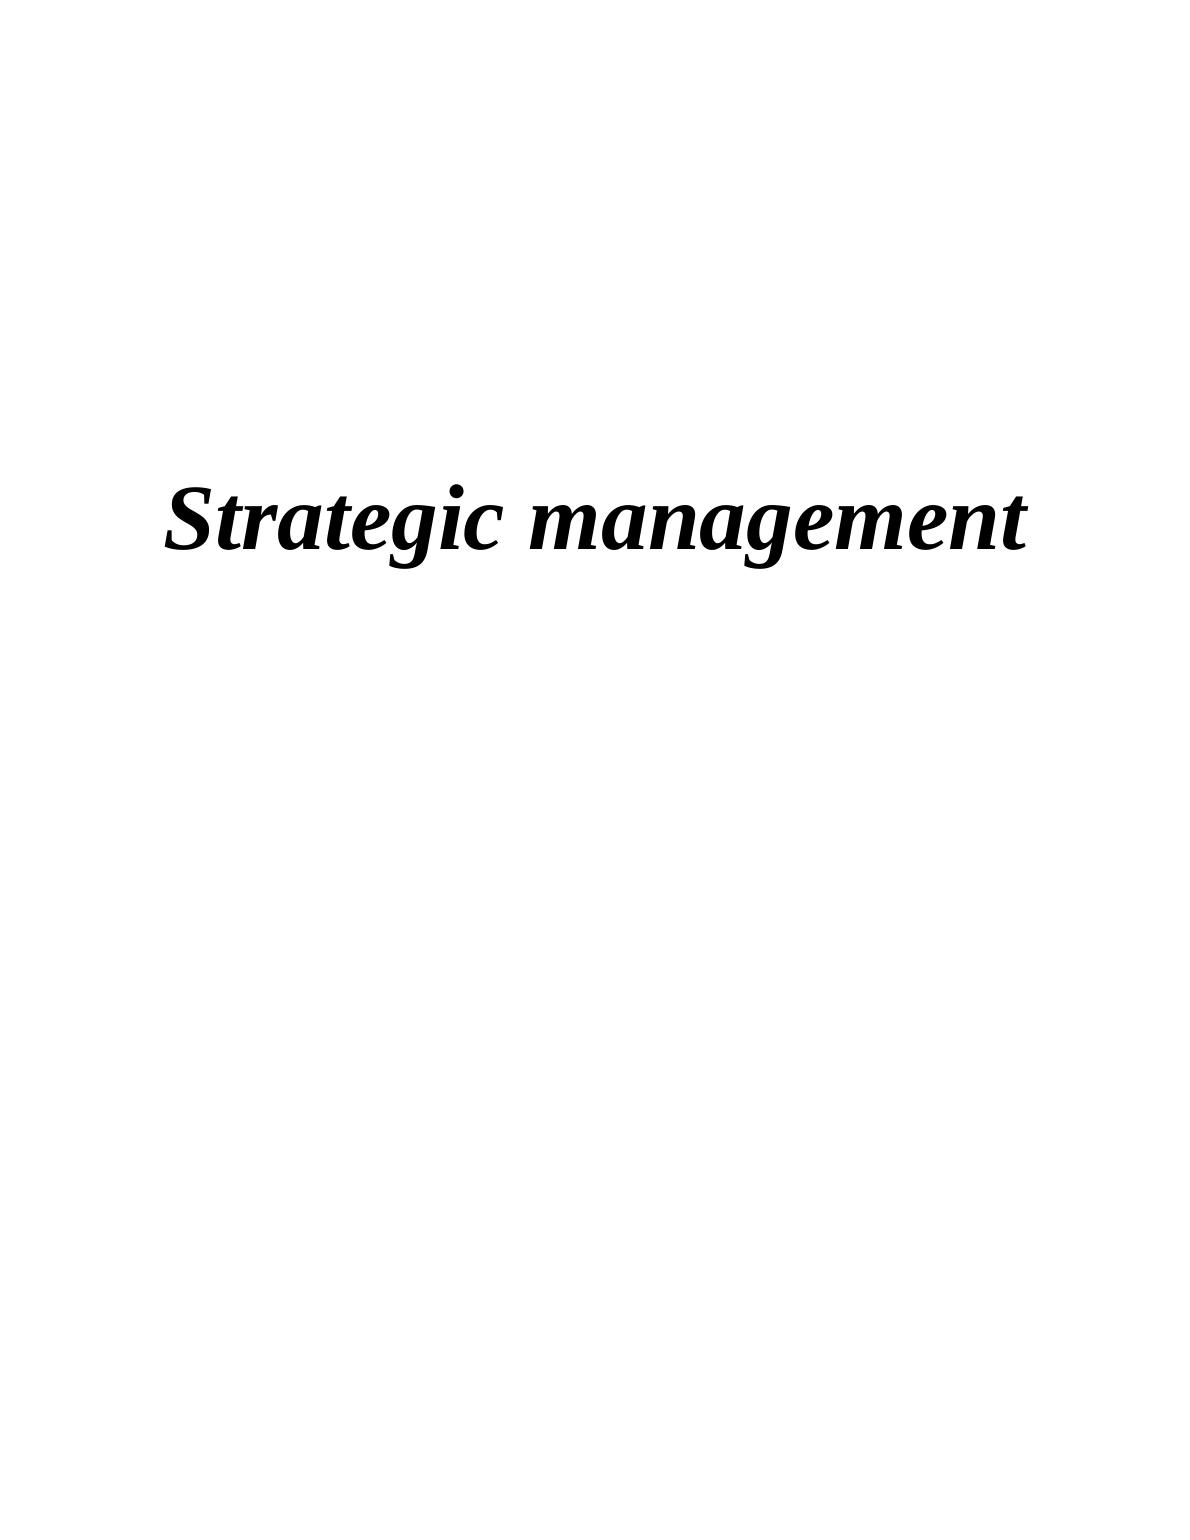 Strategic Management: H&M Analysis_1